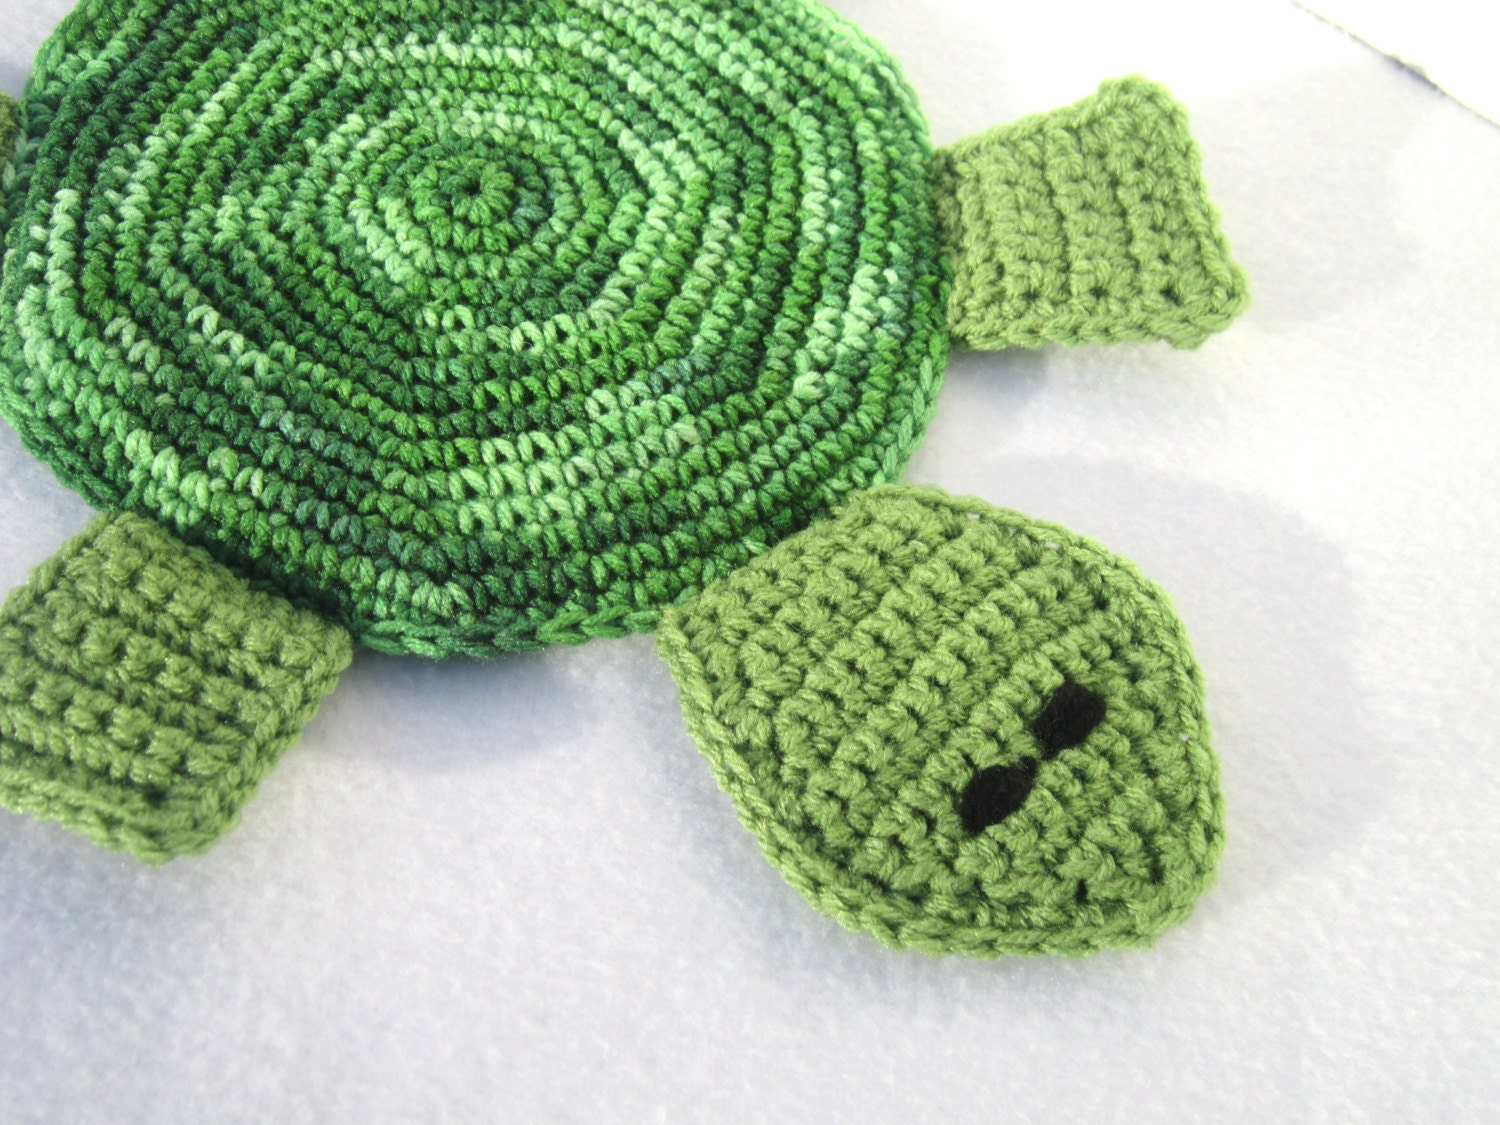 Pot Holder in Greens Turtle Hot Pad by crochetedbycharlene on Etsy